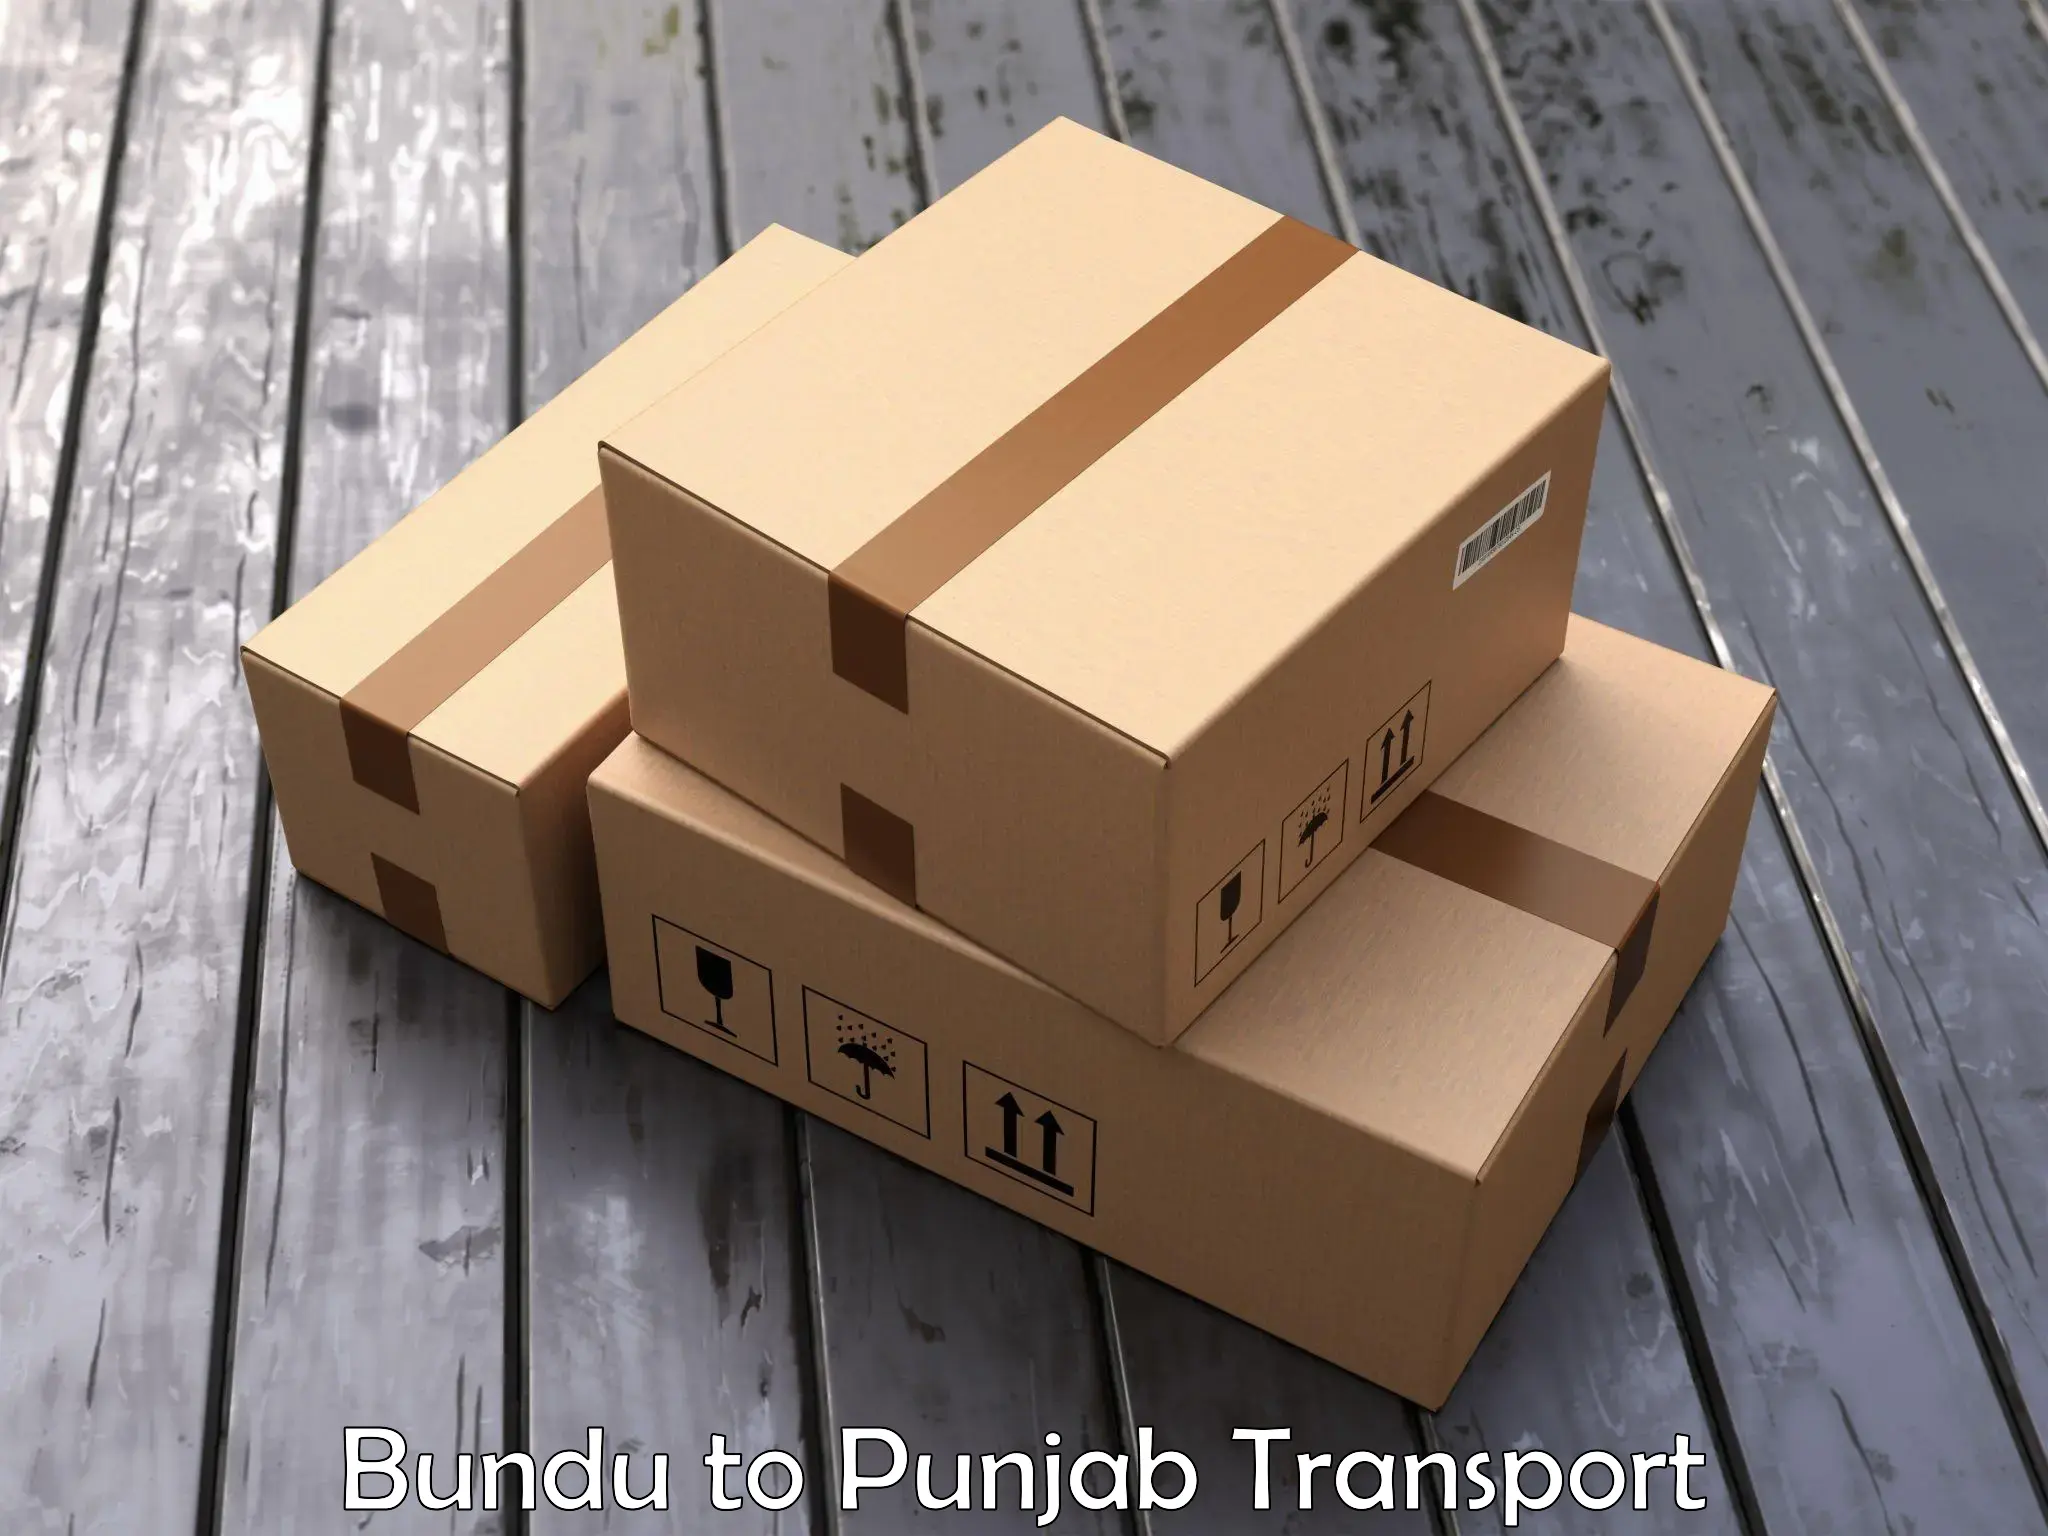 Container transport service Bundu to Punjab